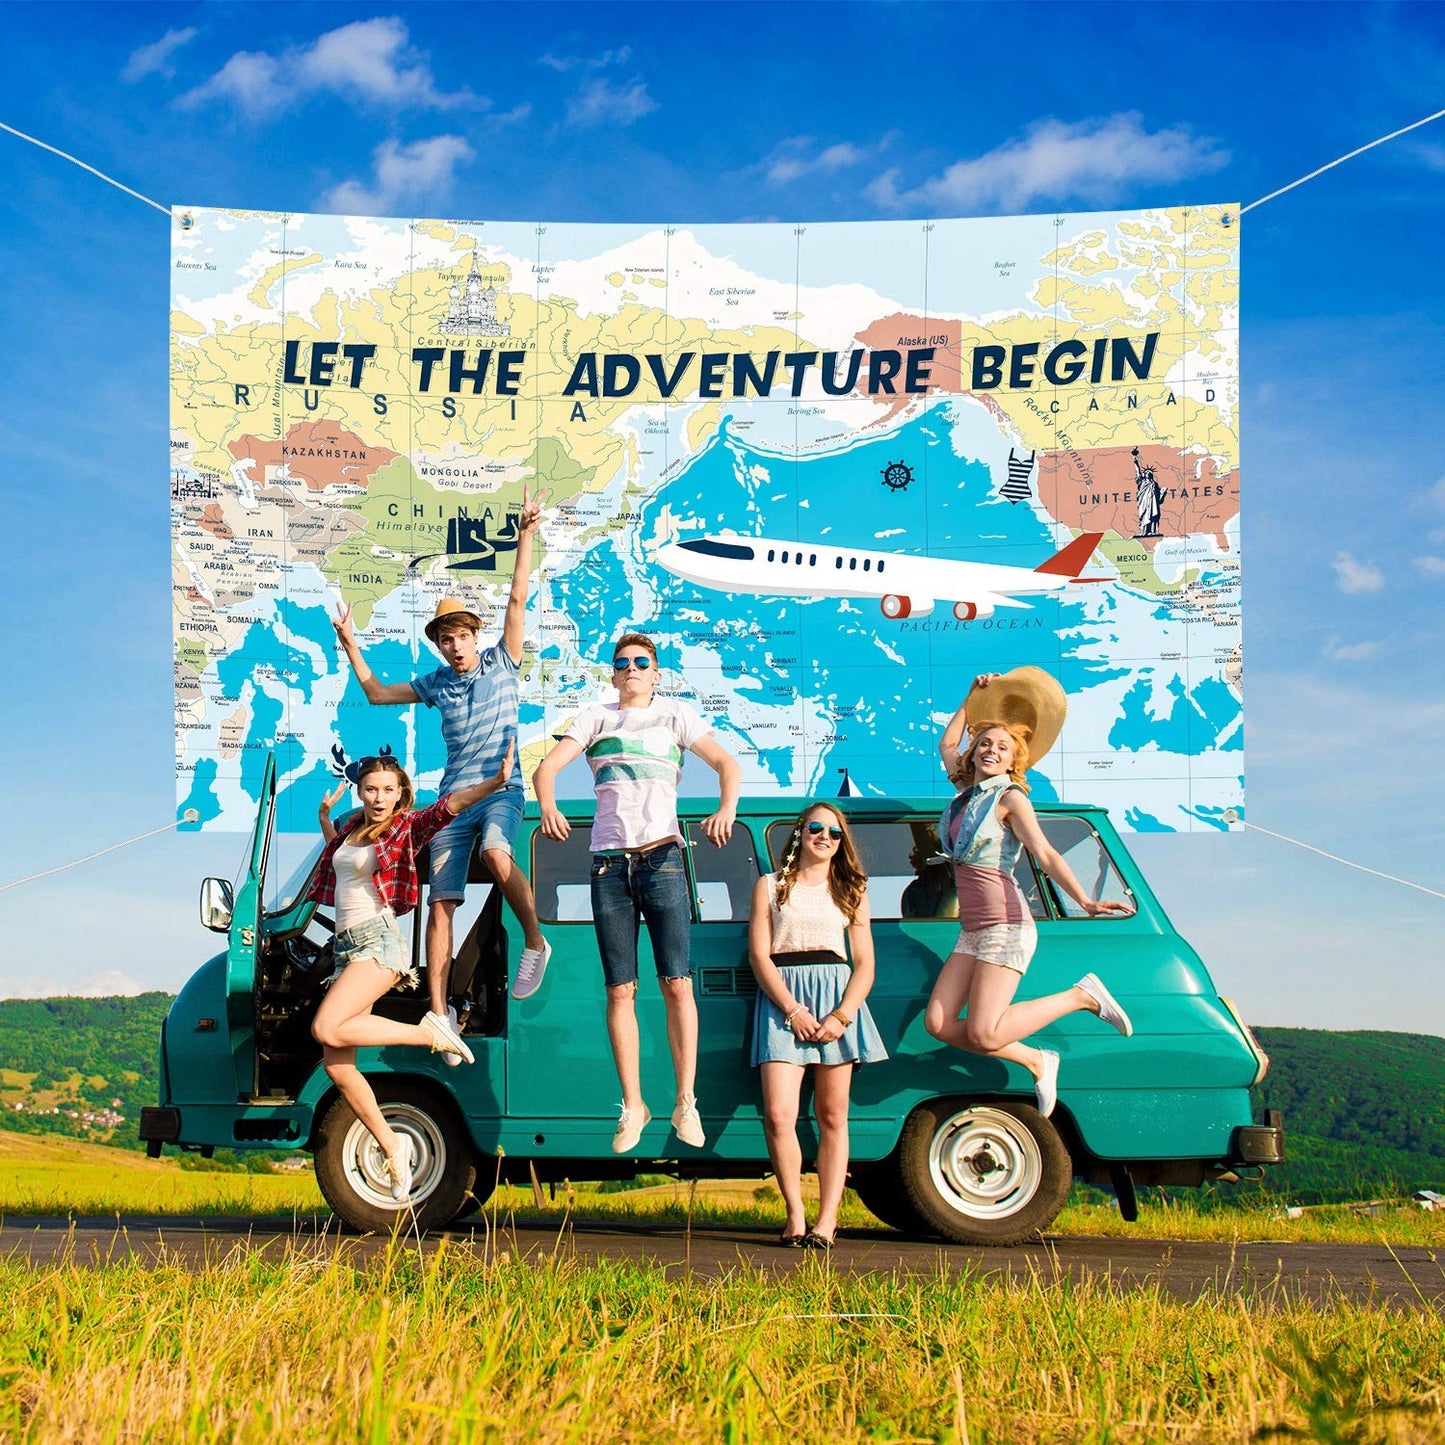 Adventure Awaits Backdrop Large Travel Theme Banner Prop 6 x 3.6 Feet